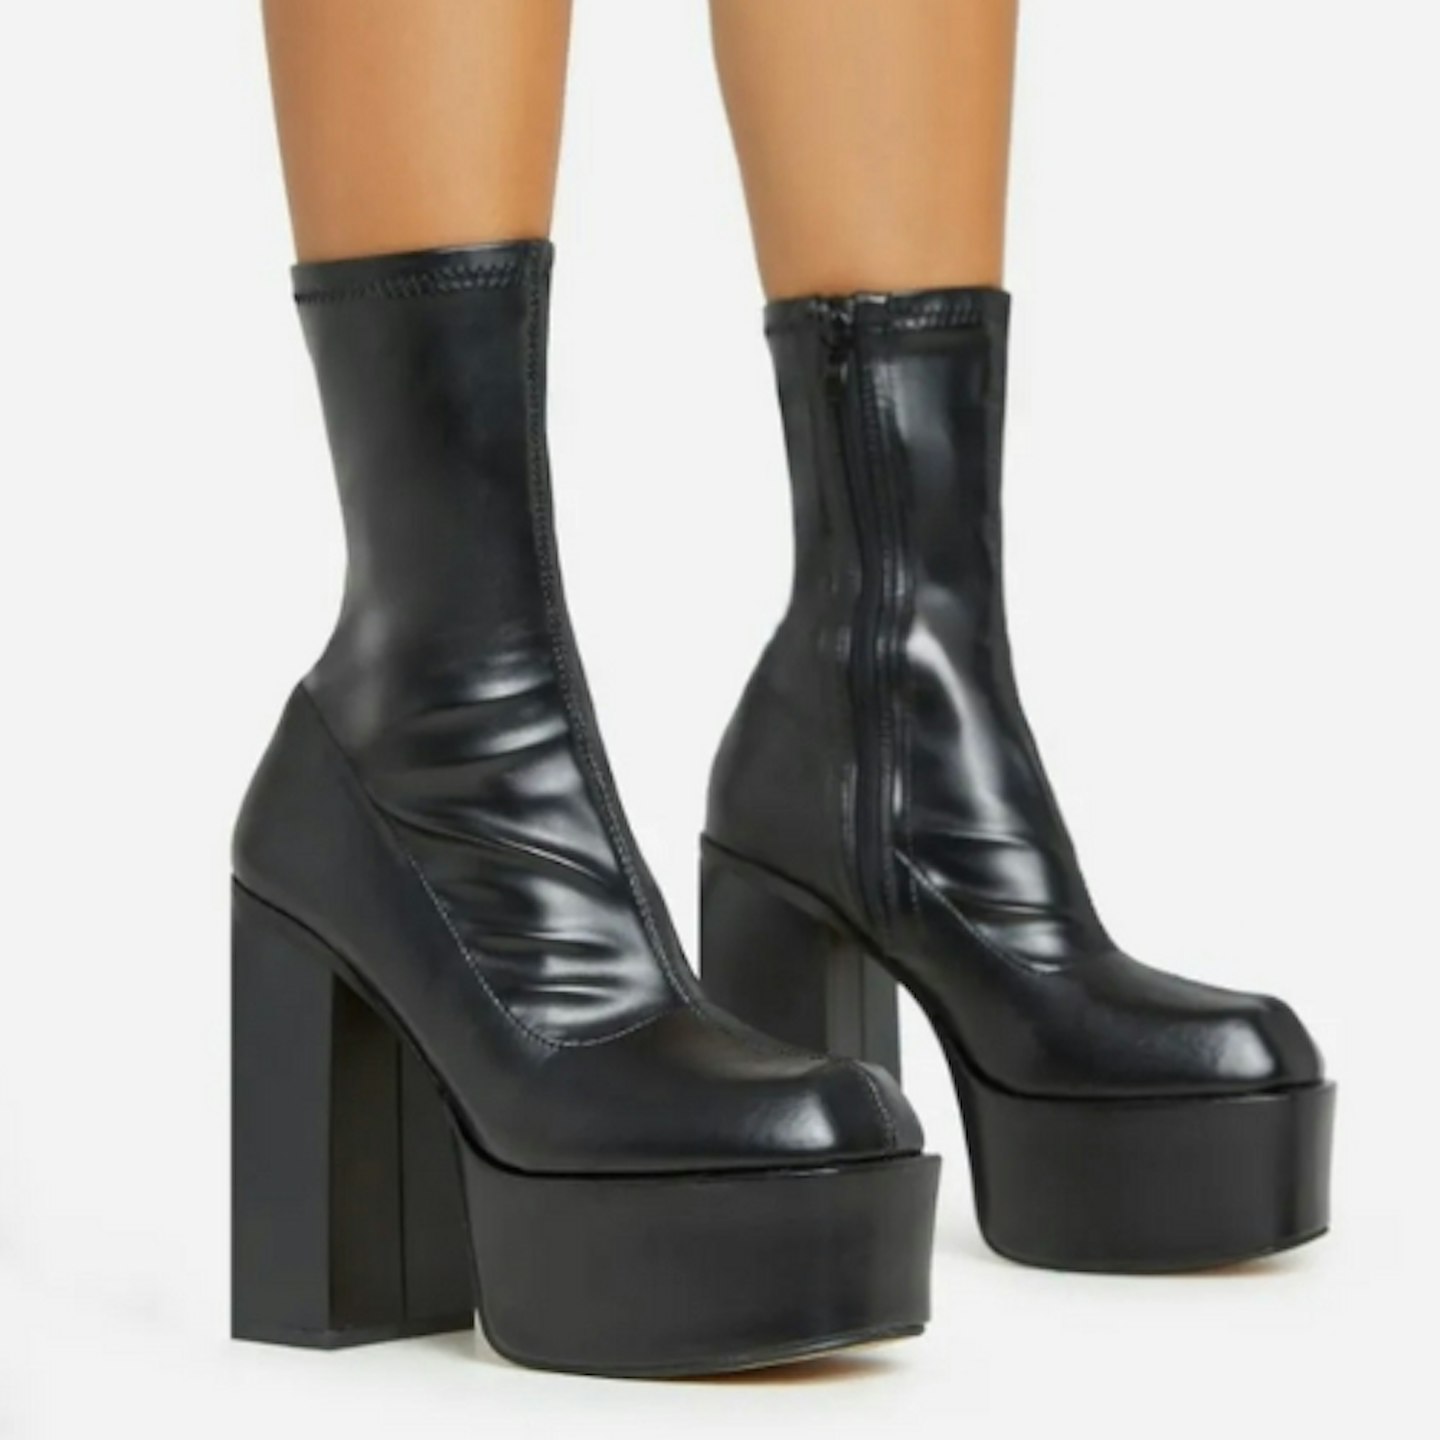 EGO Fiji Square Toe Block Heel Platform Ankle Sock Boot in Black Faux Leather